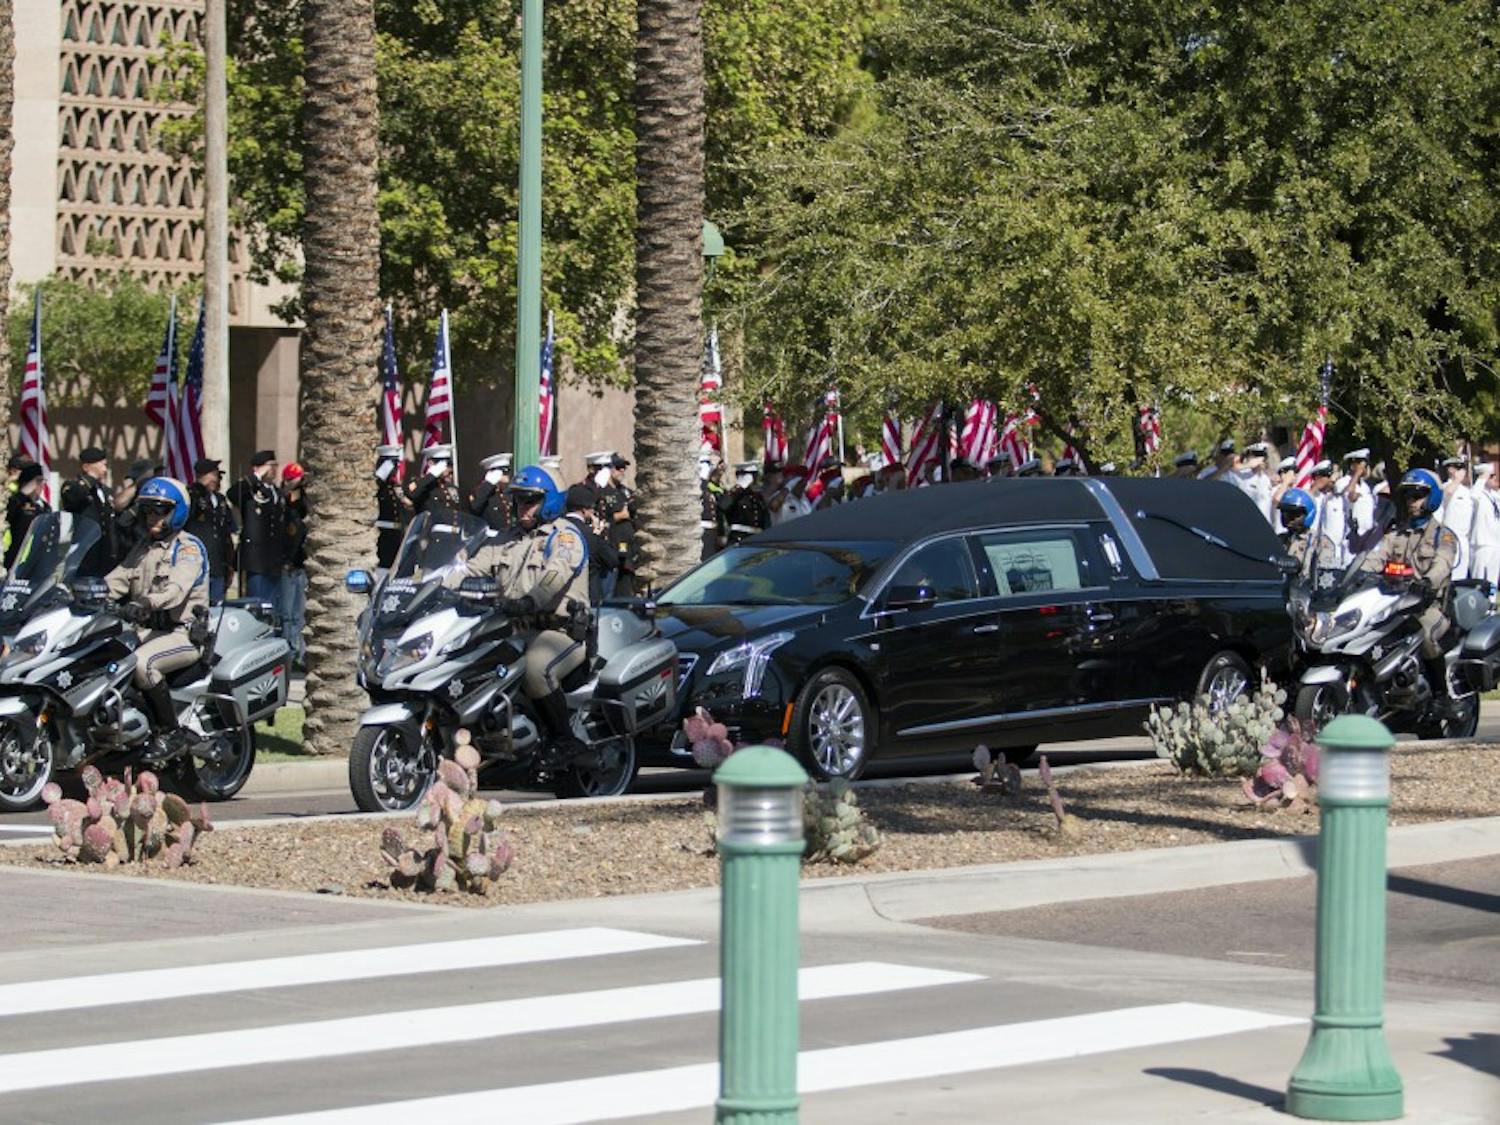 Gallery: Sen. John McCain's casket arrives at the Arizona State Capitol